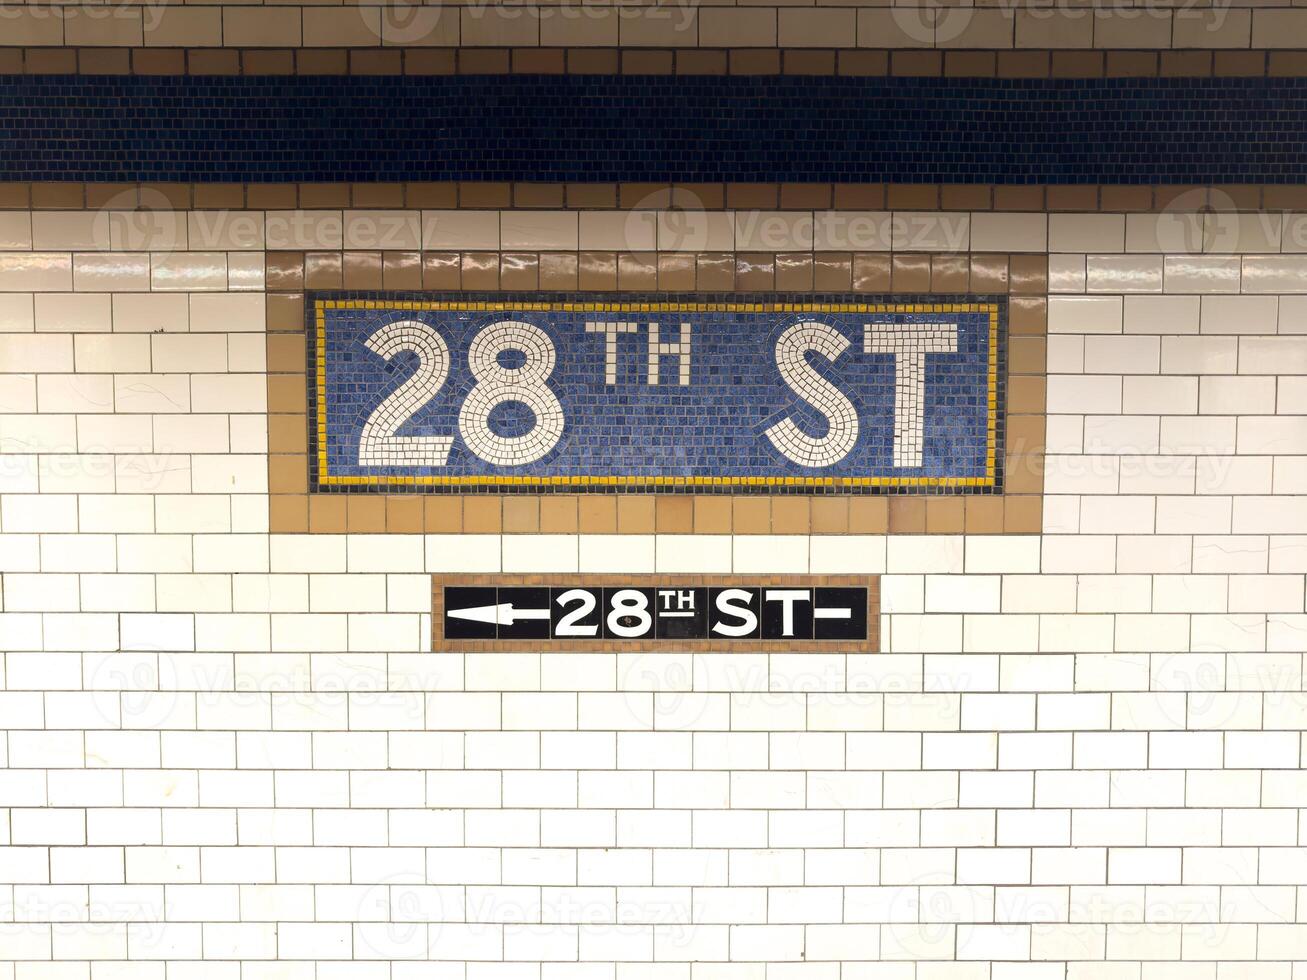 28e straat station - nieuw york stad foto